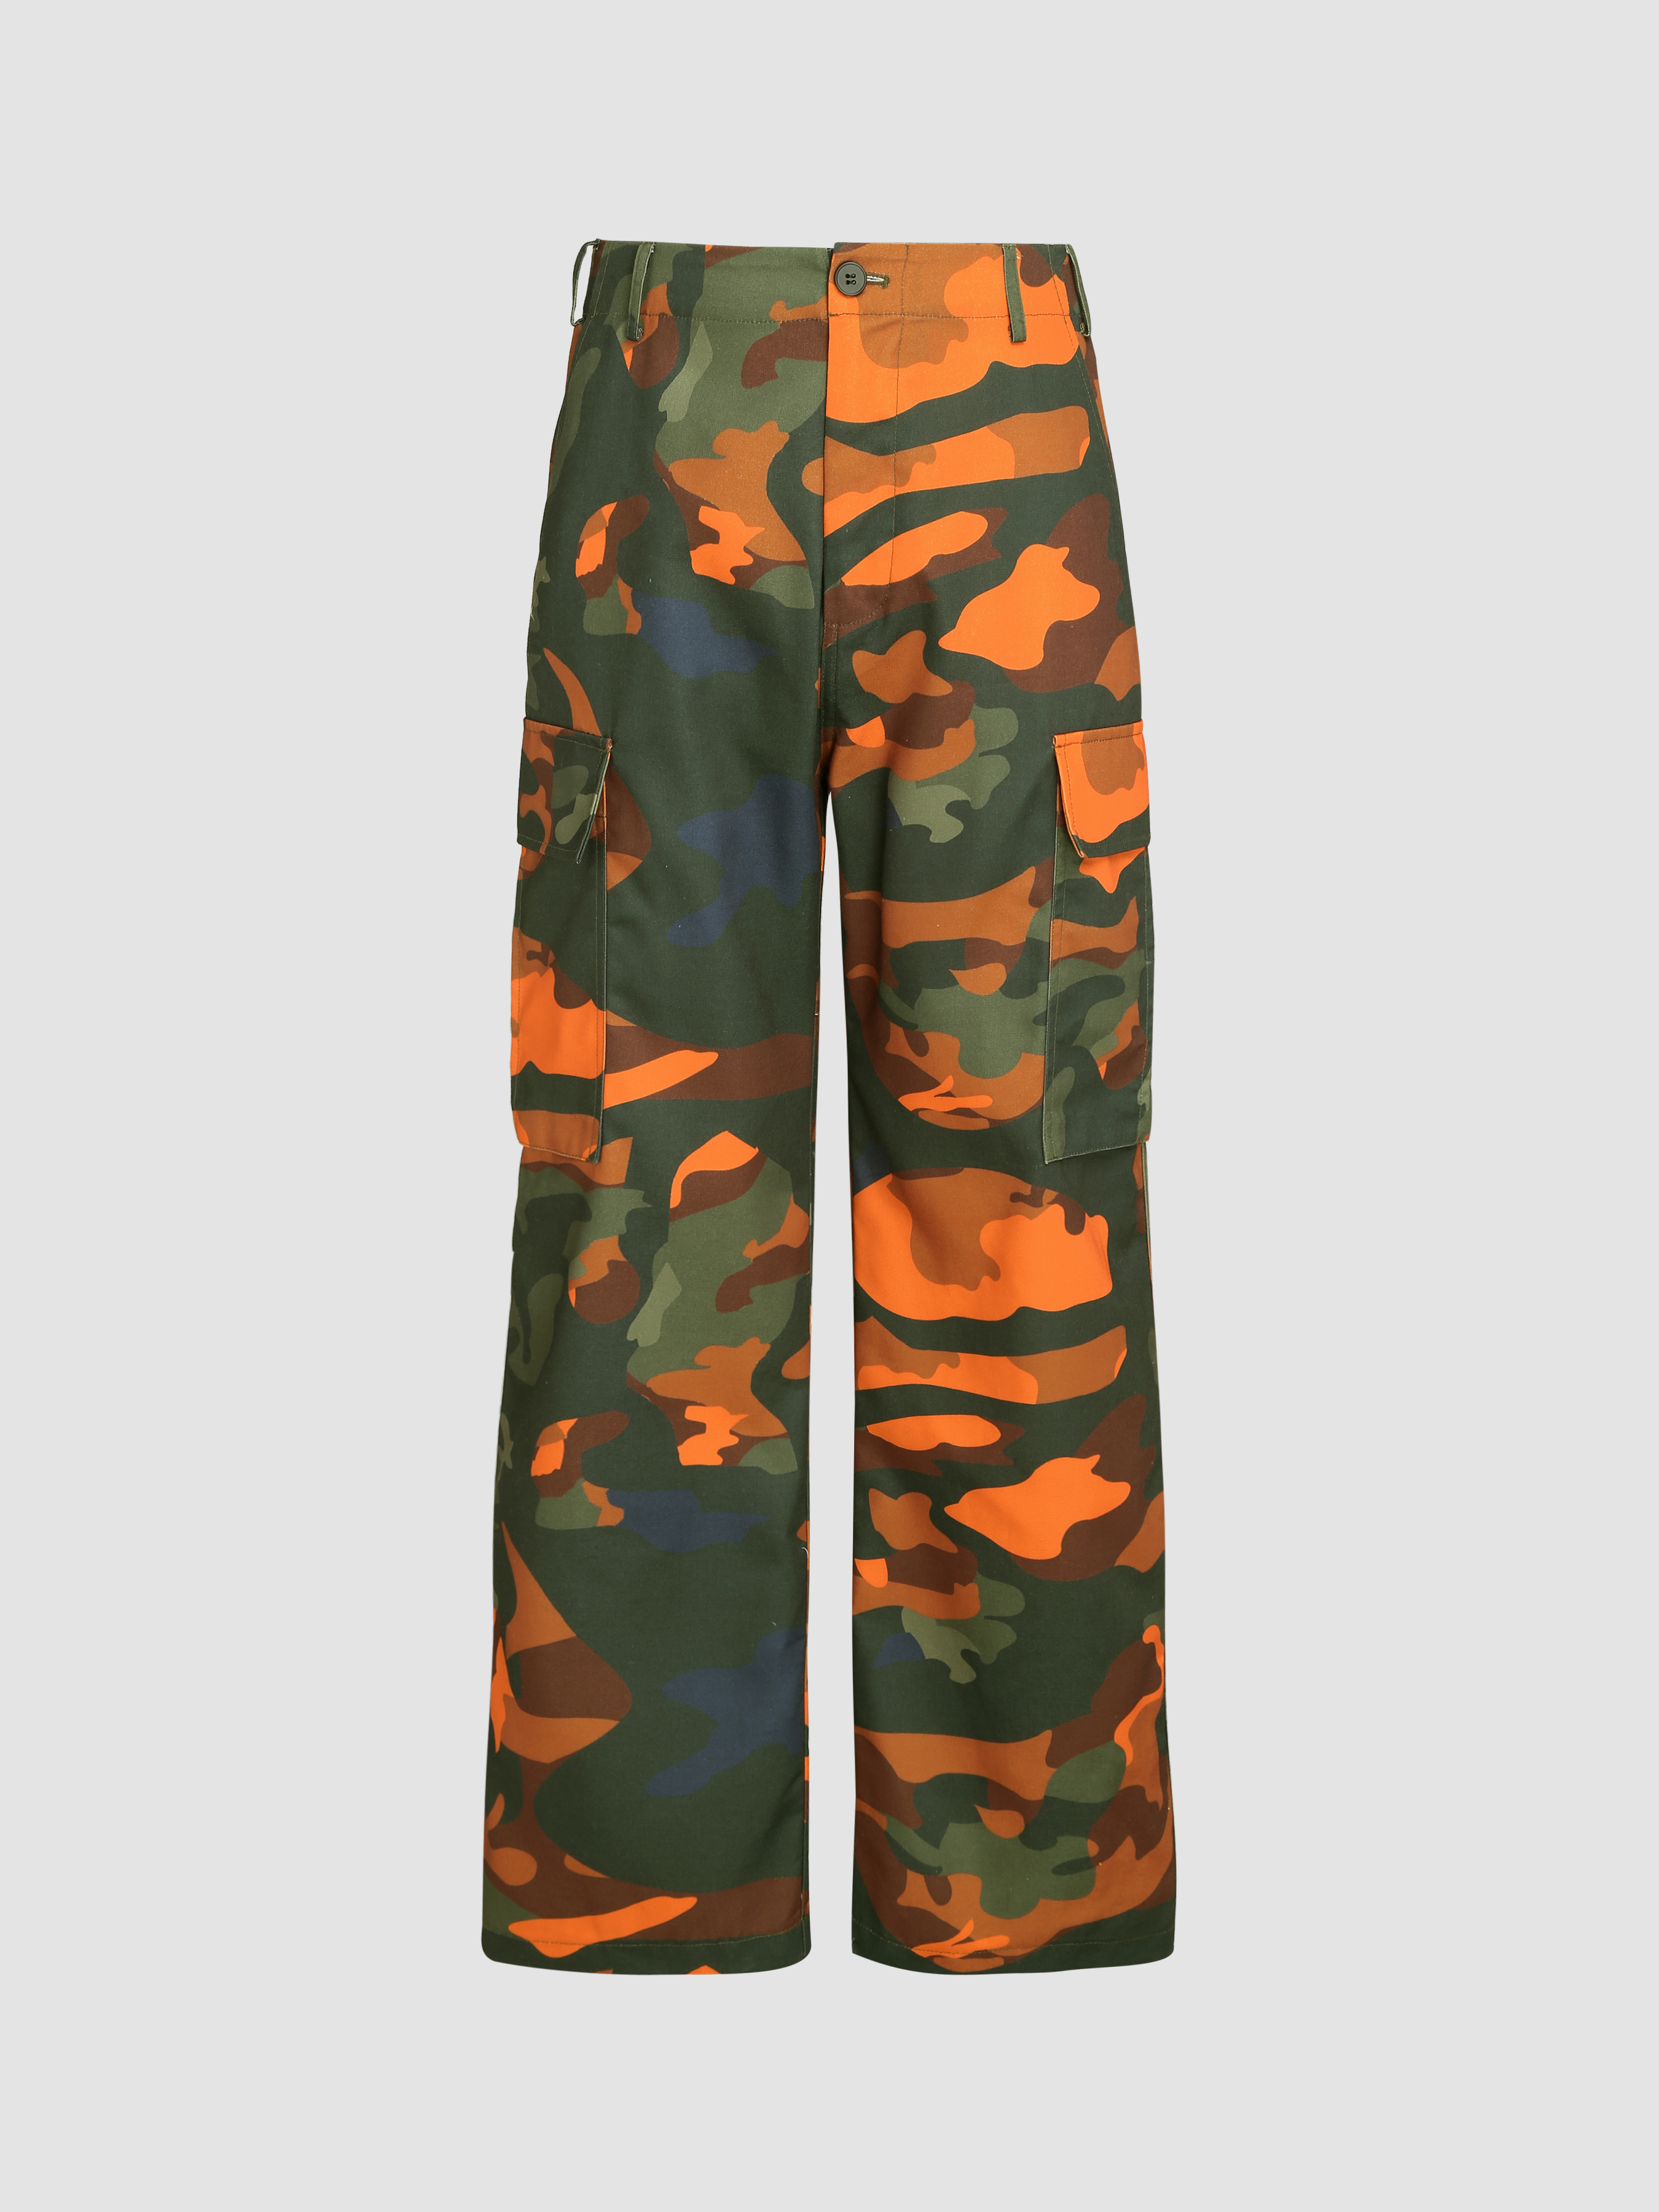 ZXCK Women Camouflage Pants Cargo Trousers Casual Pockets Long Pants  Military Army Combat Pants Capris Hip Hop S-3XL-Orange,L : Amazon.co.uk:  Fashion